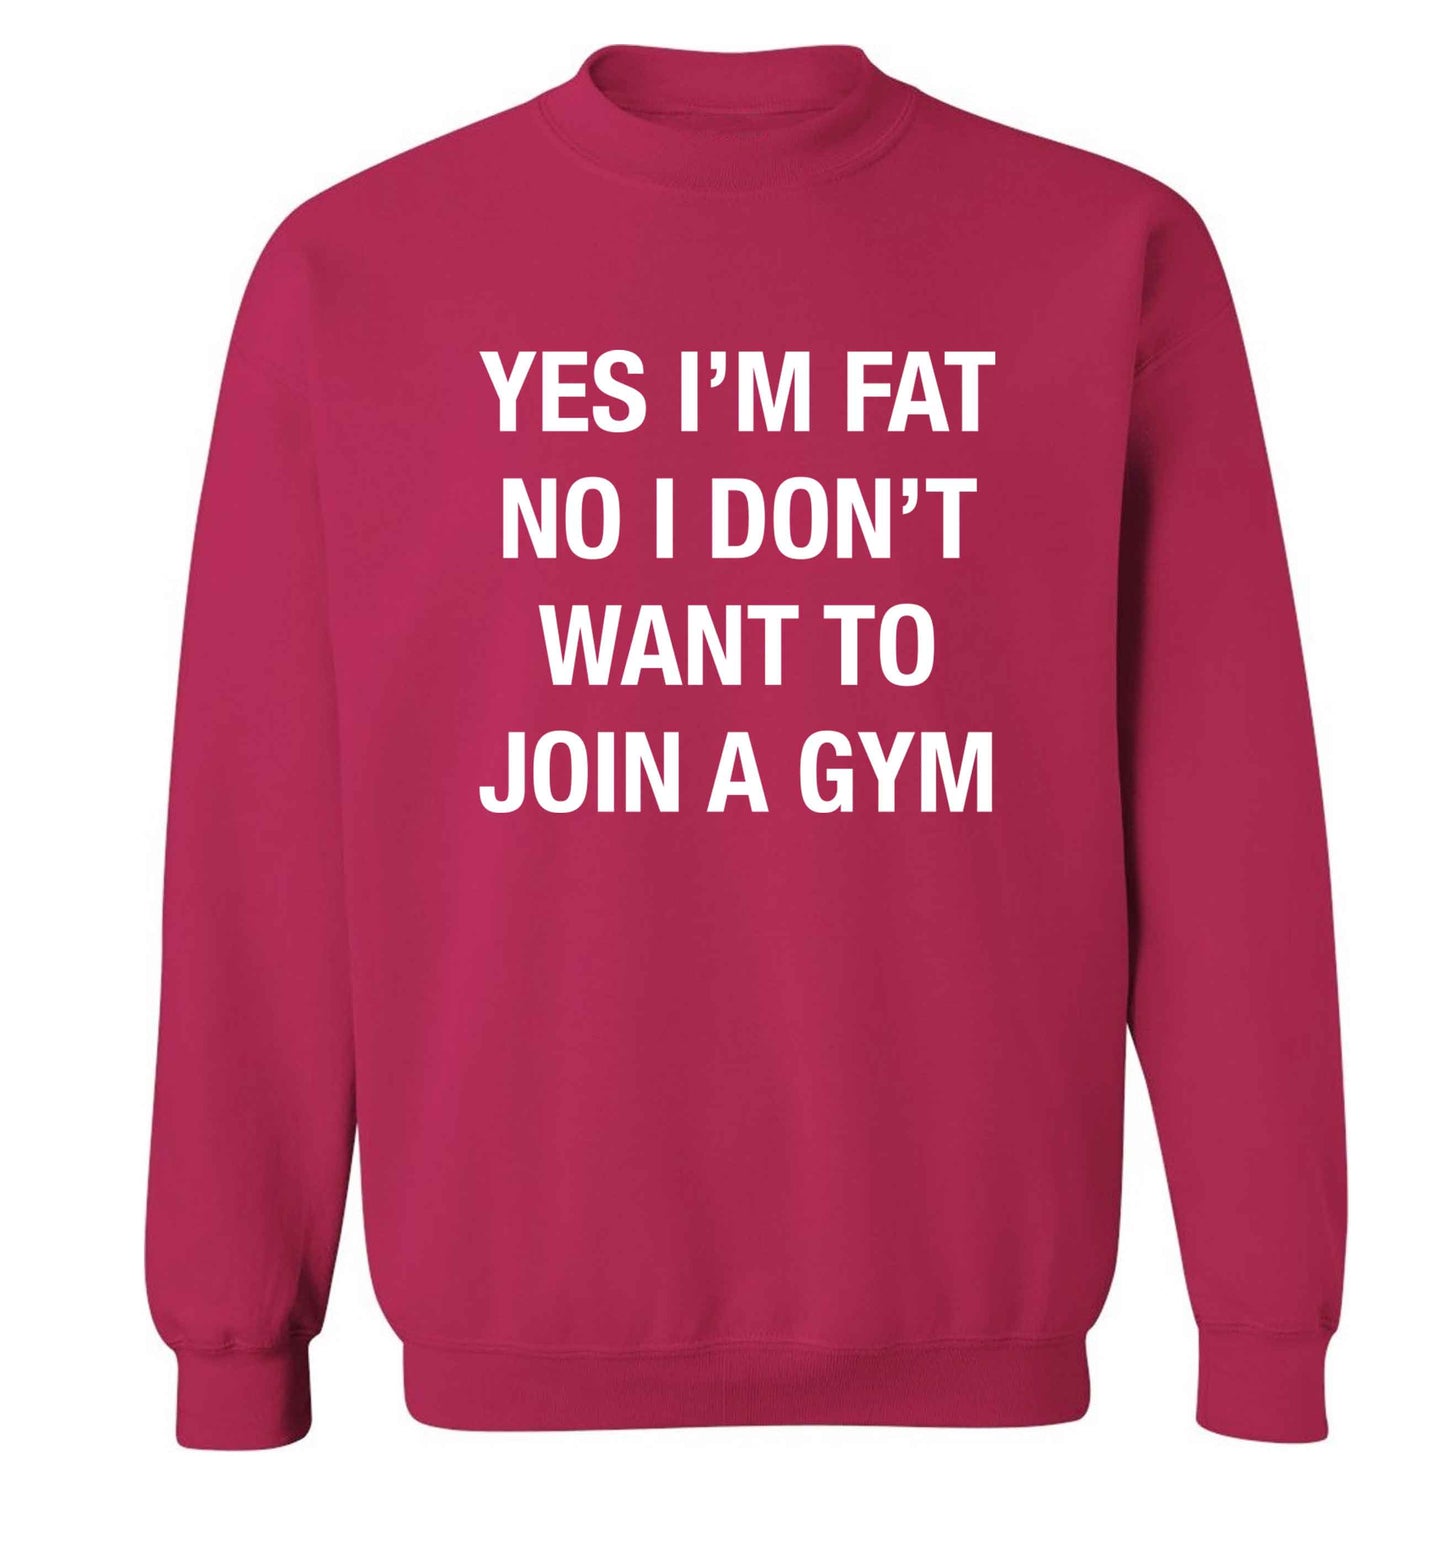 Yes I'm fat, no I don't want to go to the gym adult's unisex pink sweater 2XL